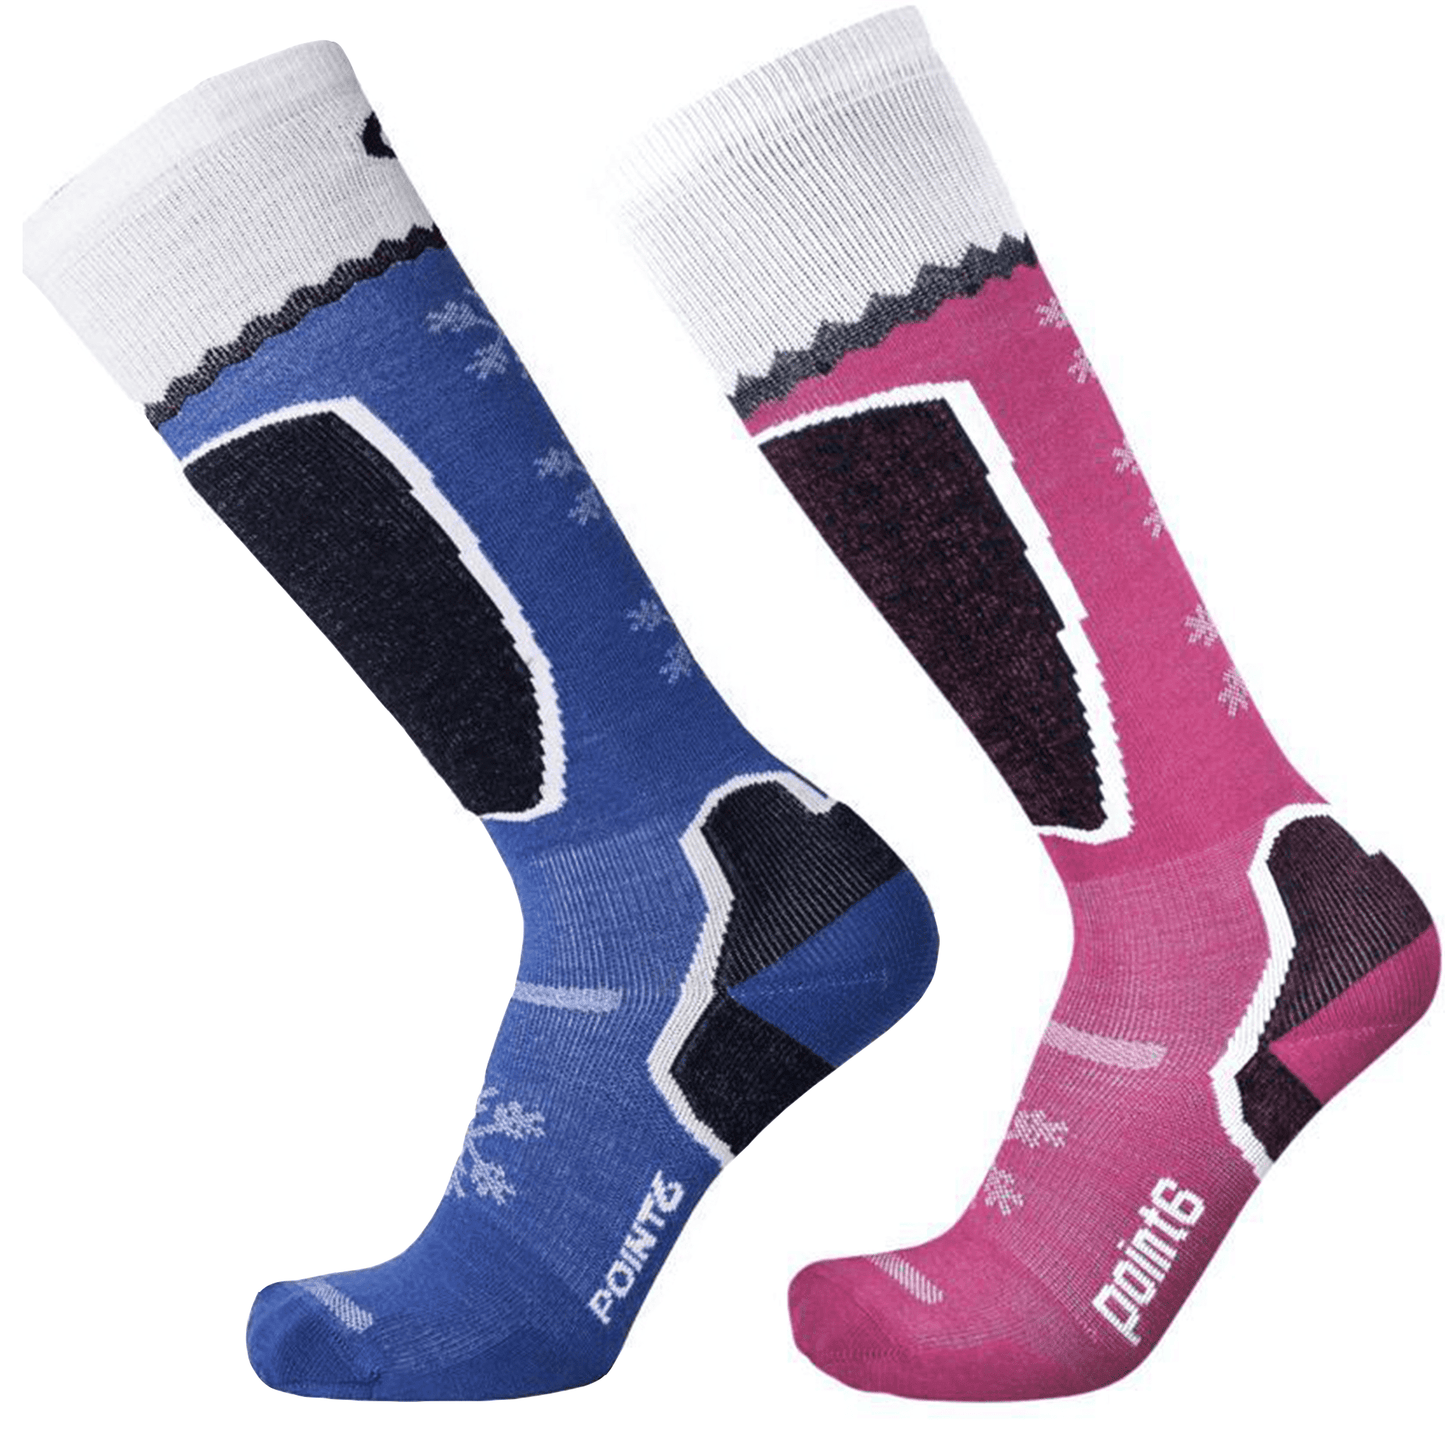 Point6 Merino Wool Ski Socks - Women's Pro Light